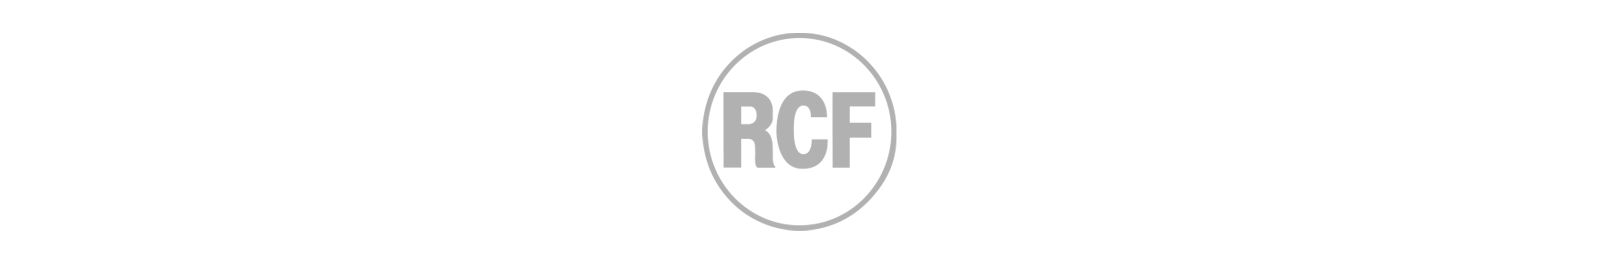 RCF.